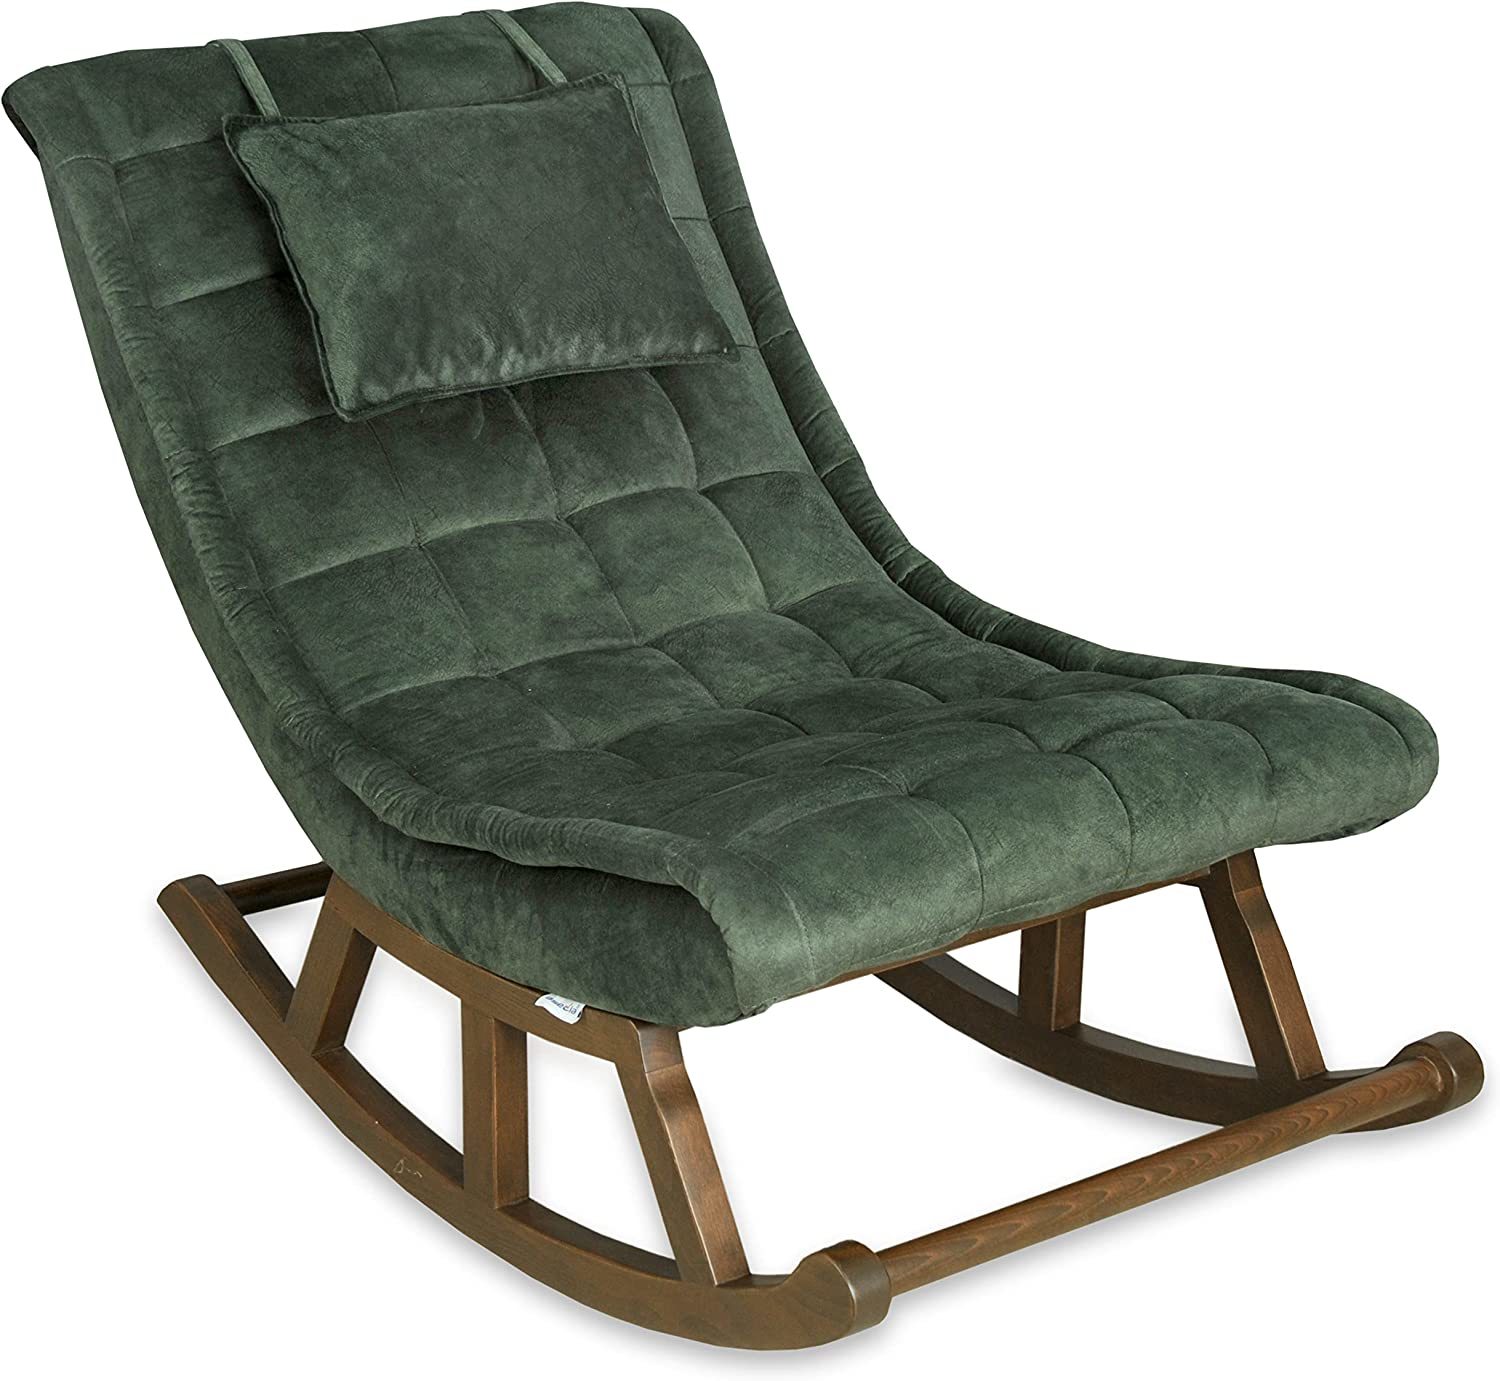 Asedia Miskin Ceviz Yeşil Ahşap Sallanan Sandalye Dinlenme Koltuğu Emzirme Koltuğu Baba Koltuğu Tv,Okuma Koltuğu